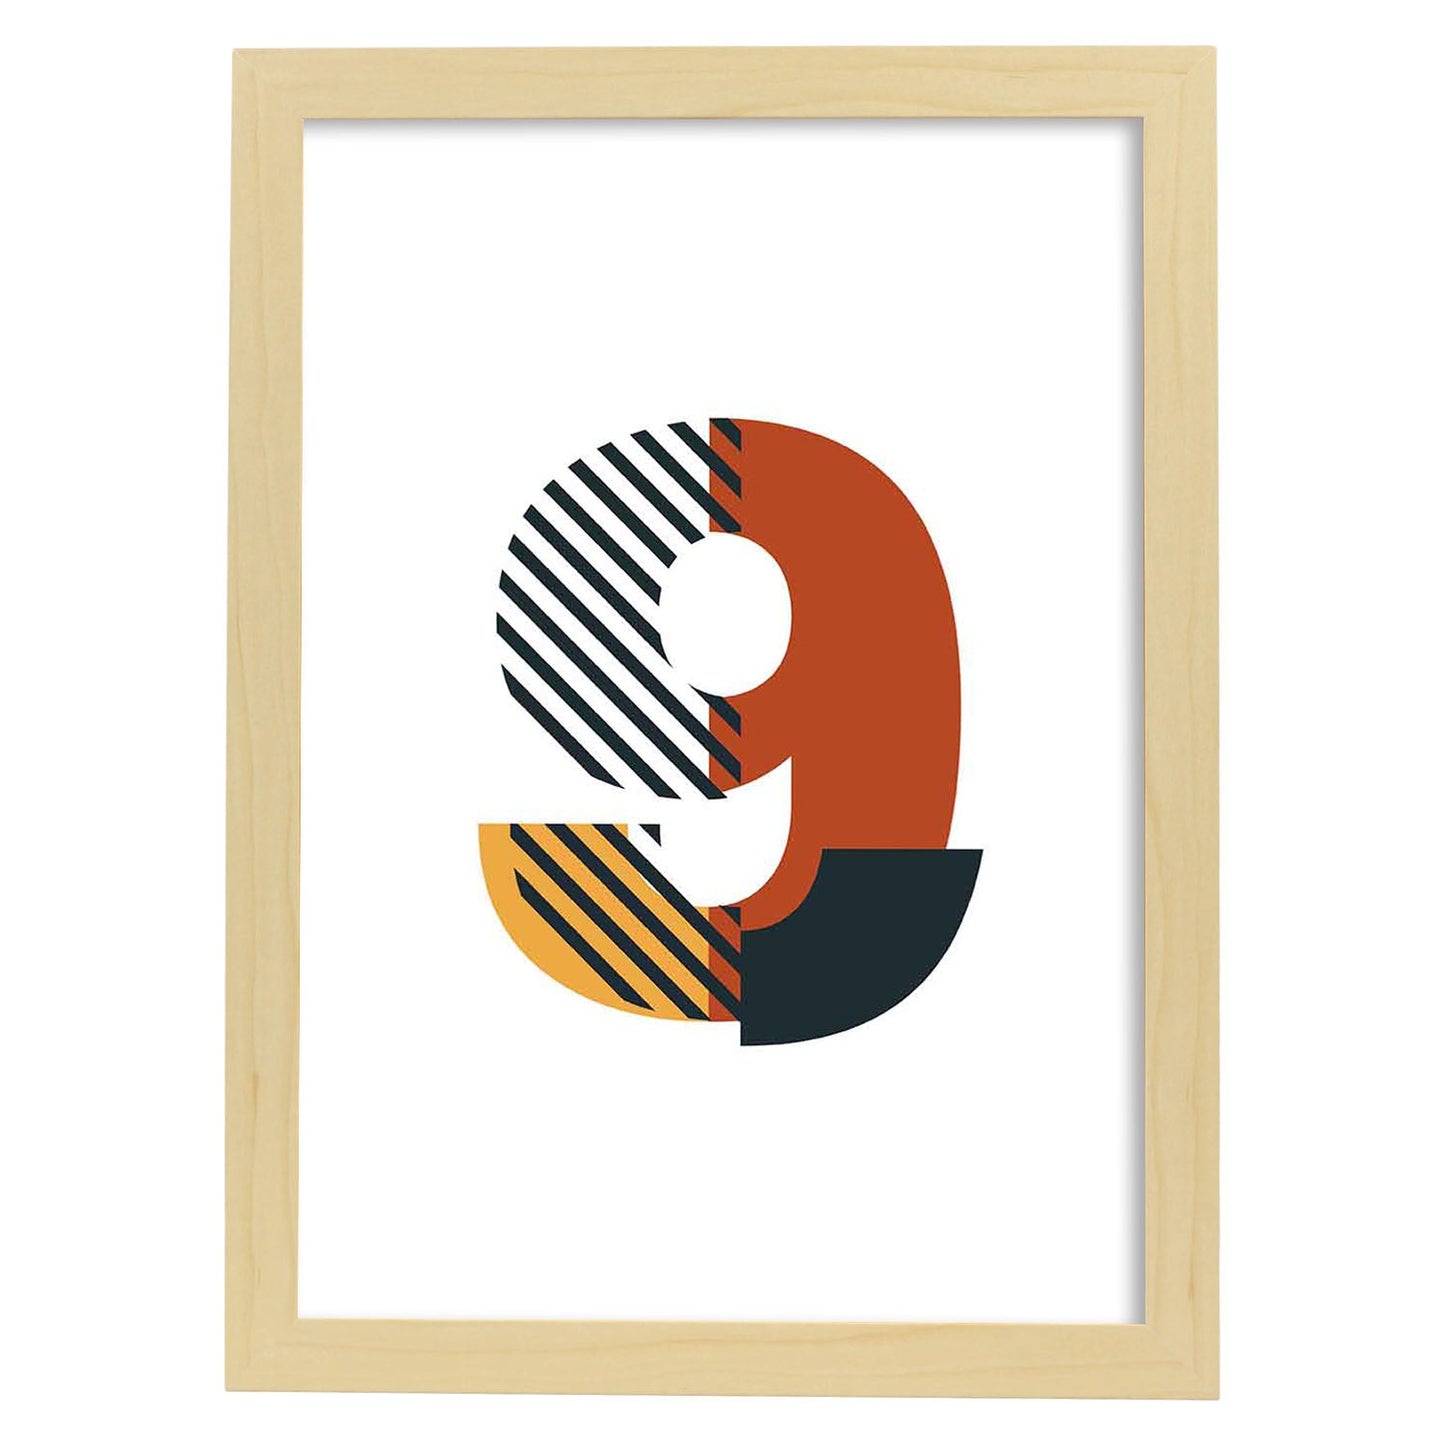 Poster de número 9. Lámina estilo Geometria con imágenes del alfabeto.-Artwork-Nacnic-A4-Marco Madera clara-Nacnic Estudio SL